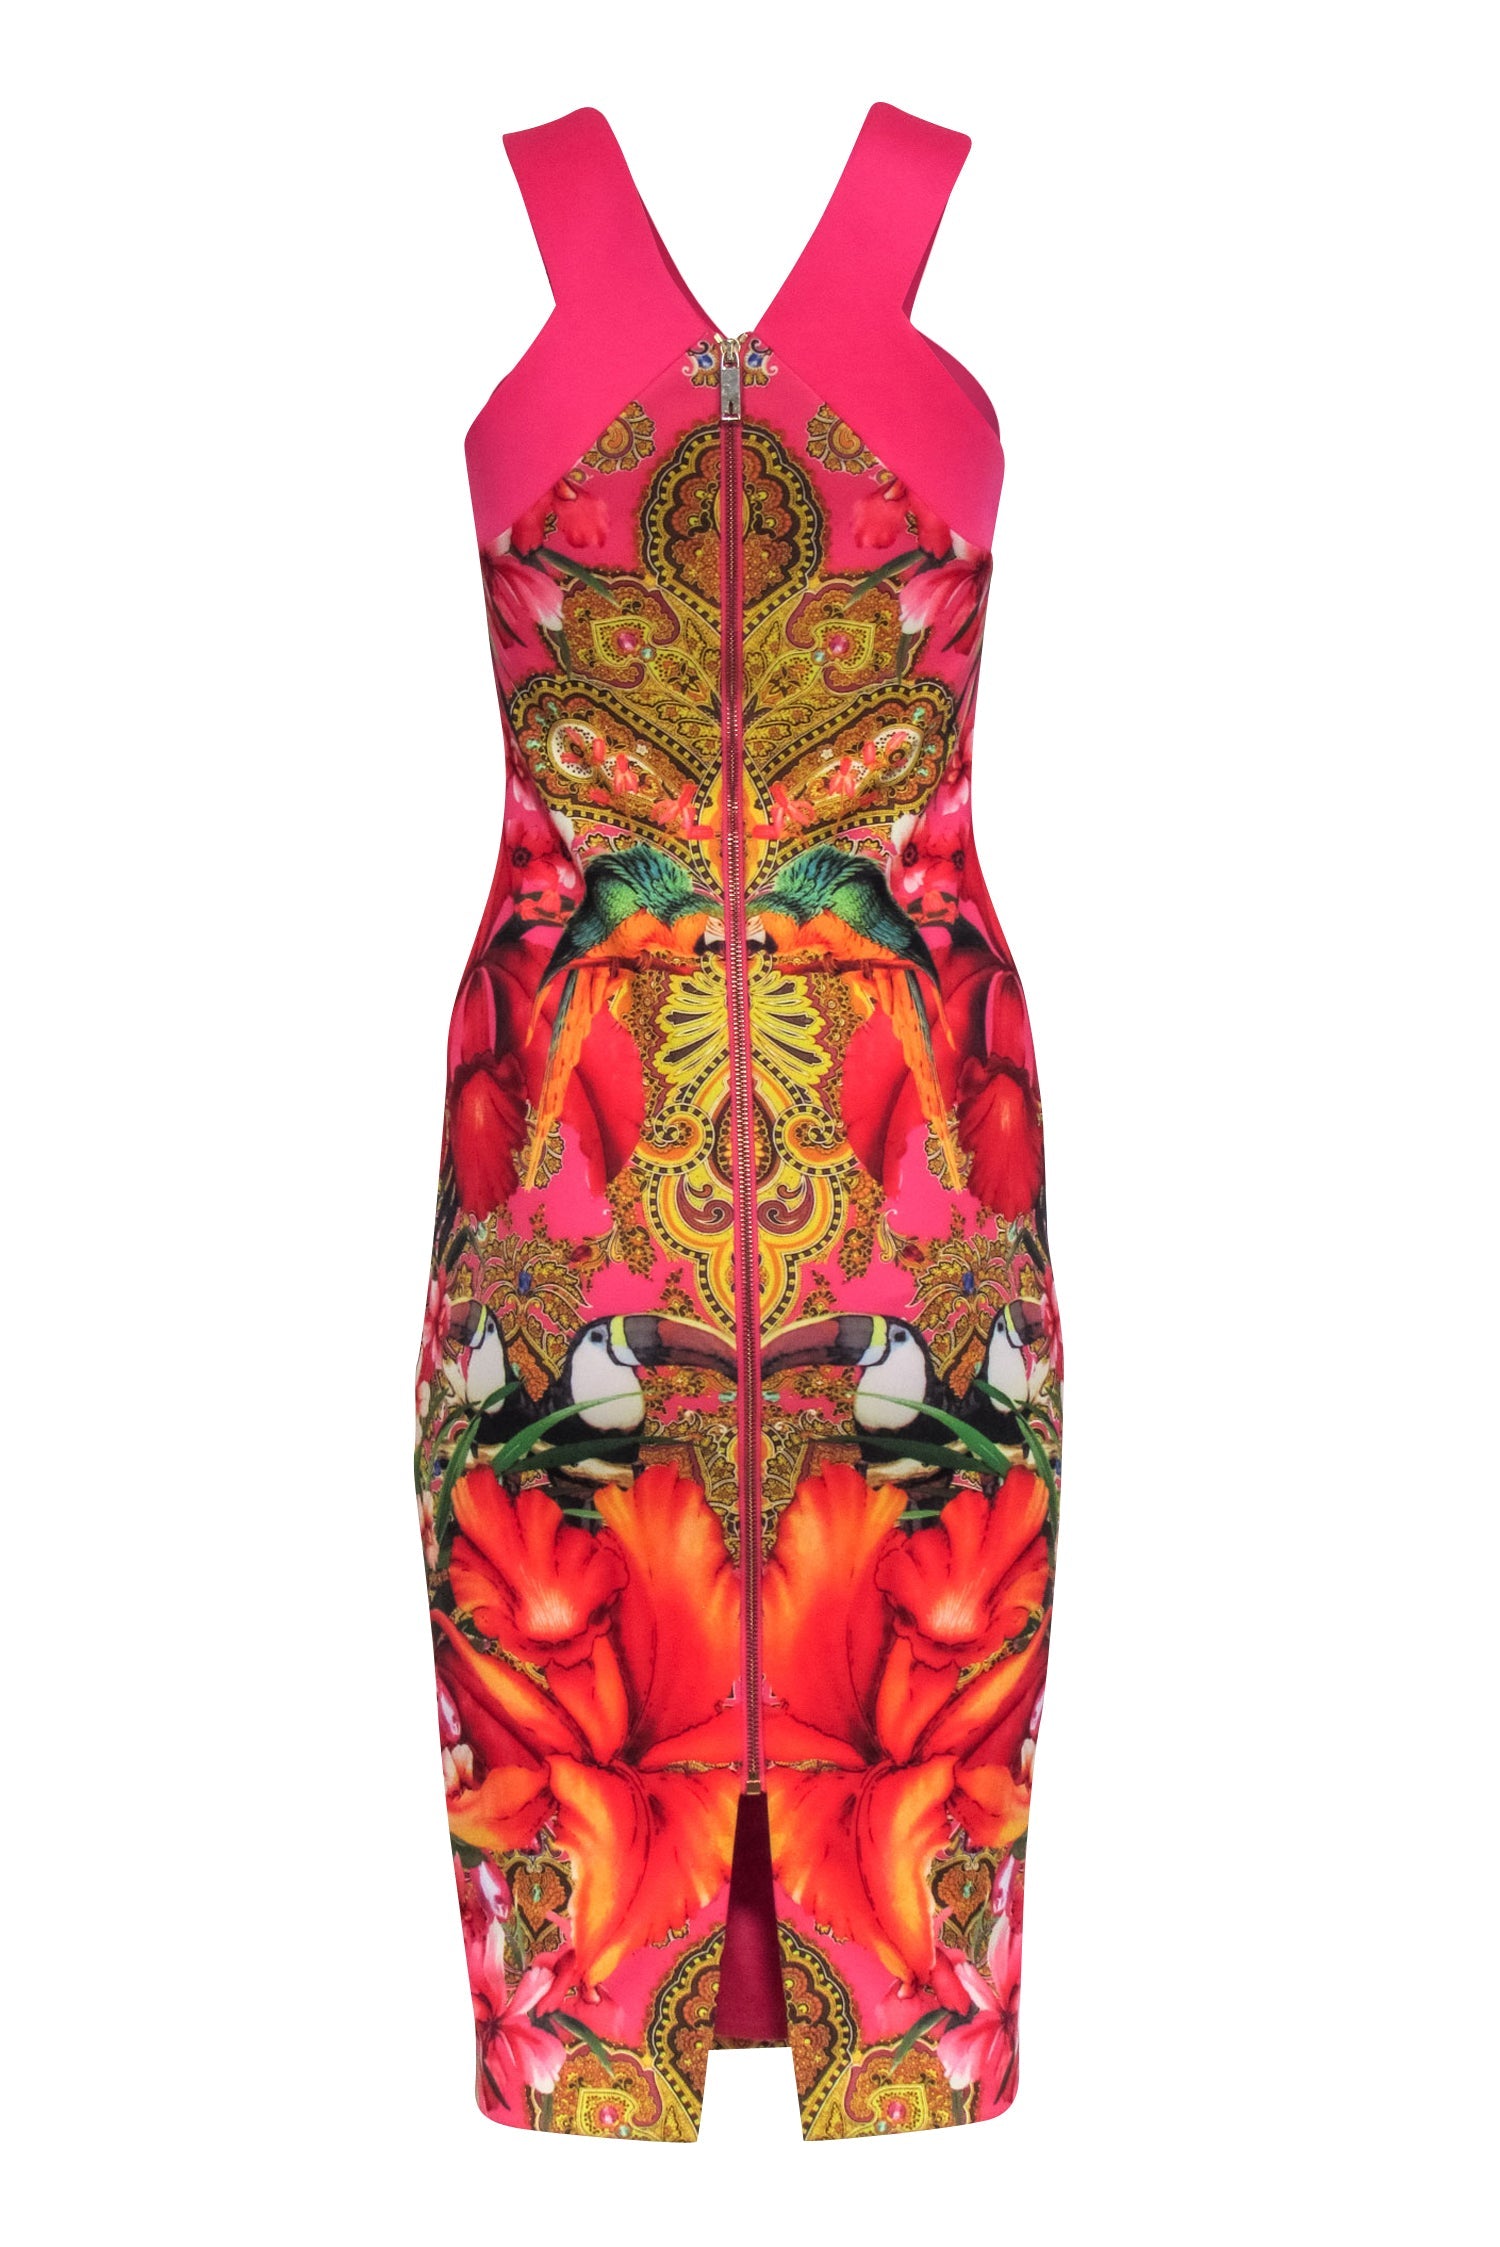 Ted Baker - Pink w/ Tropical Paisley Print Sheath Dress Sz 2